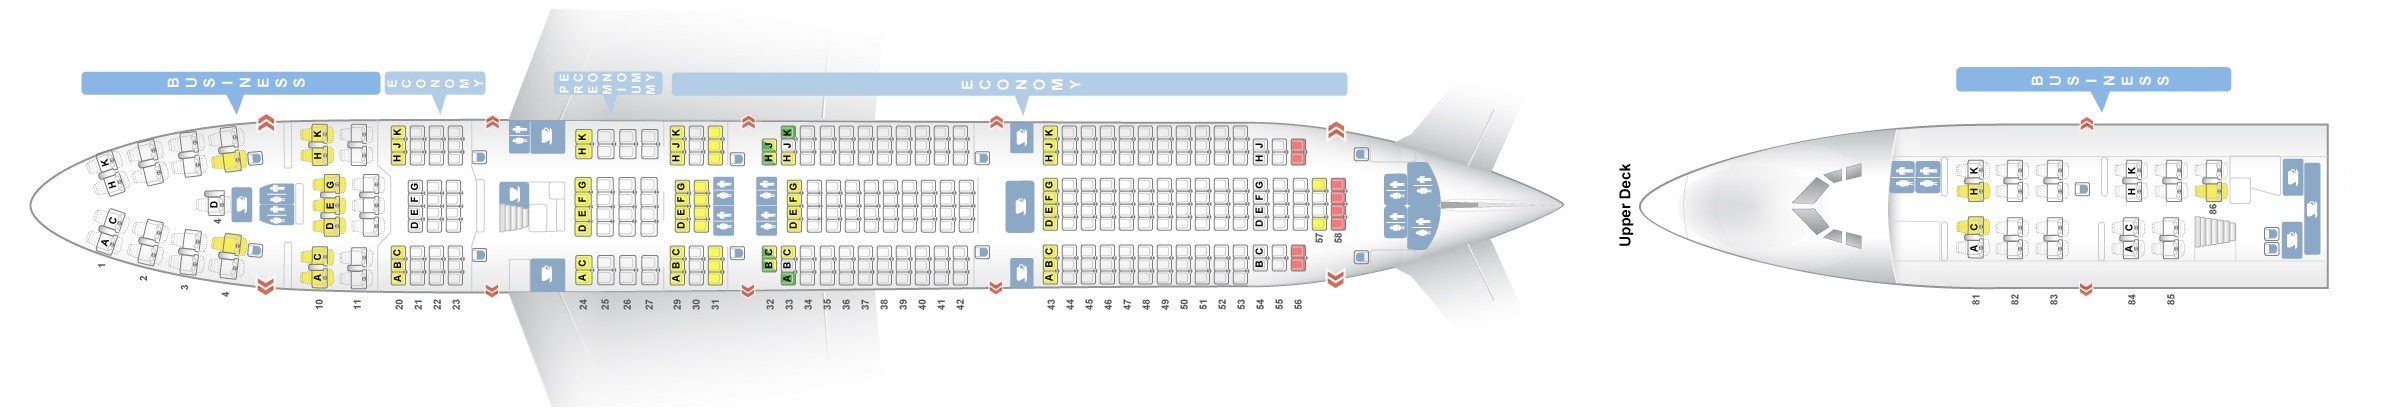 747-400 lufthansa seat